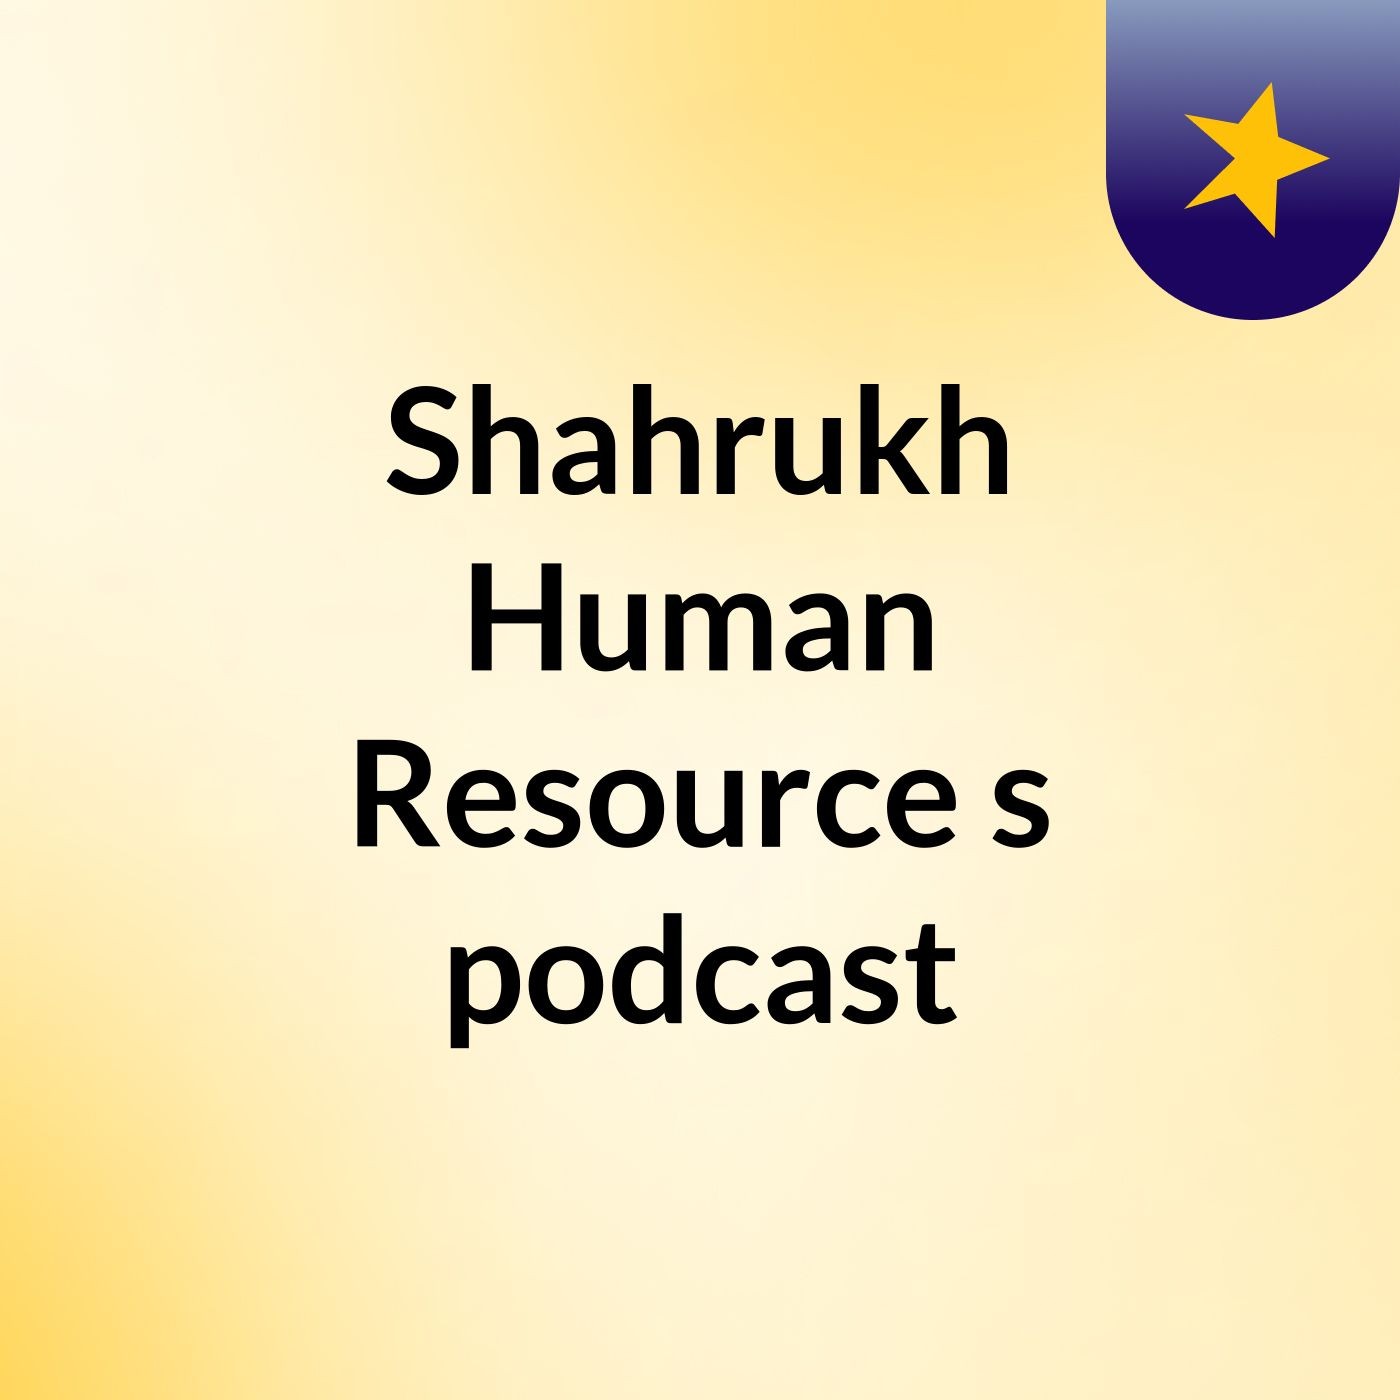 Shahrukh Human Resource's podcast